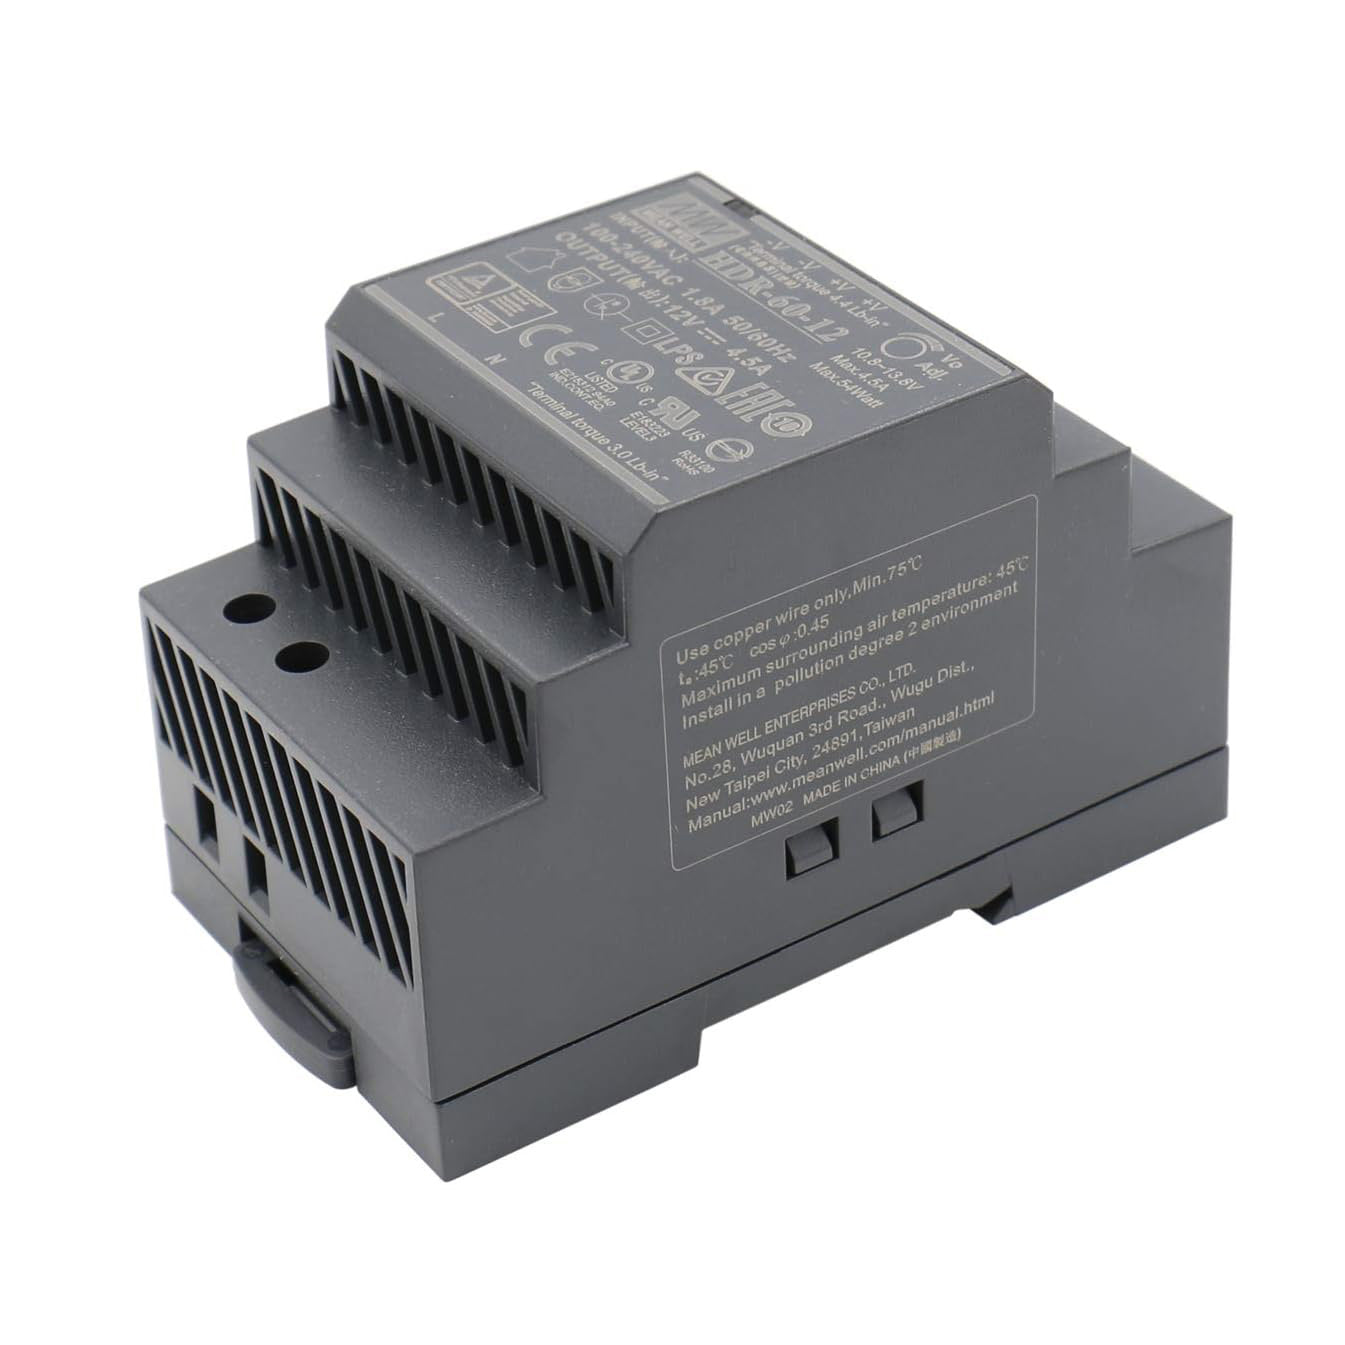 HDR-60-24 - MEAN WELL - Hardened Industrial Power Supply 24 Volt, 2.5 Amp, 60 Watt AC/DC DIN-Rail